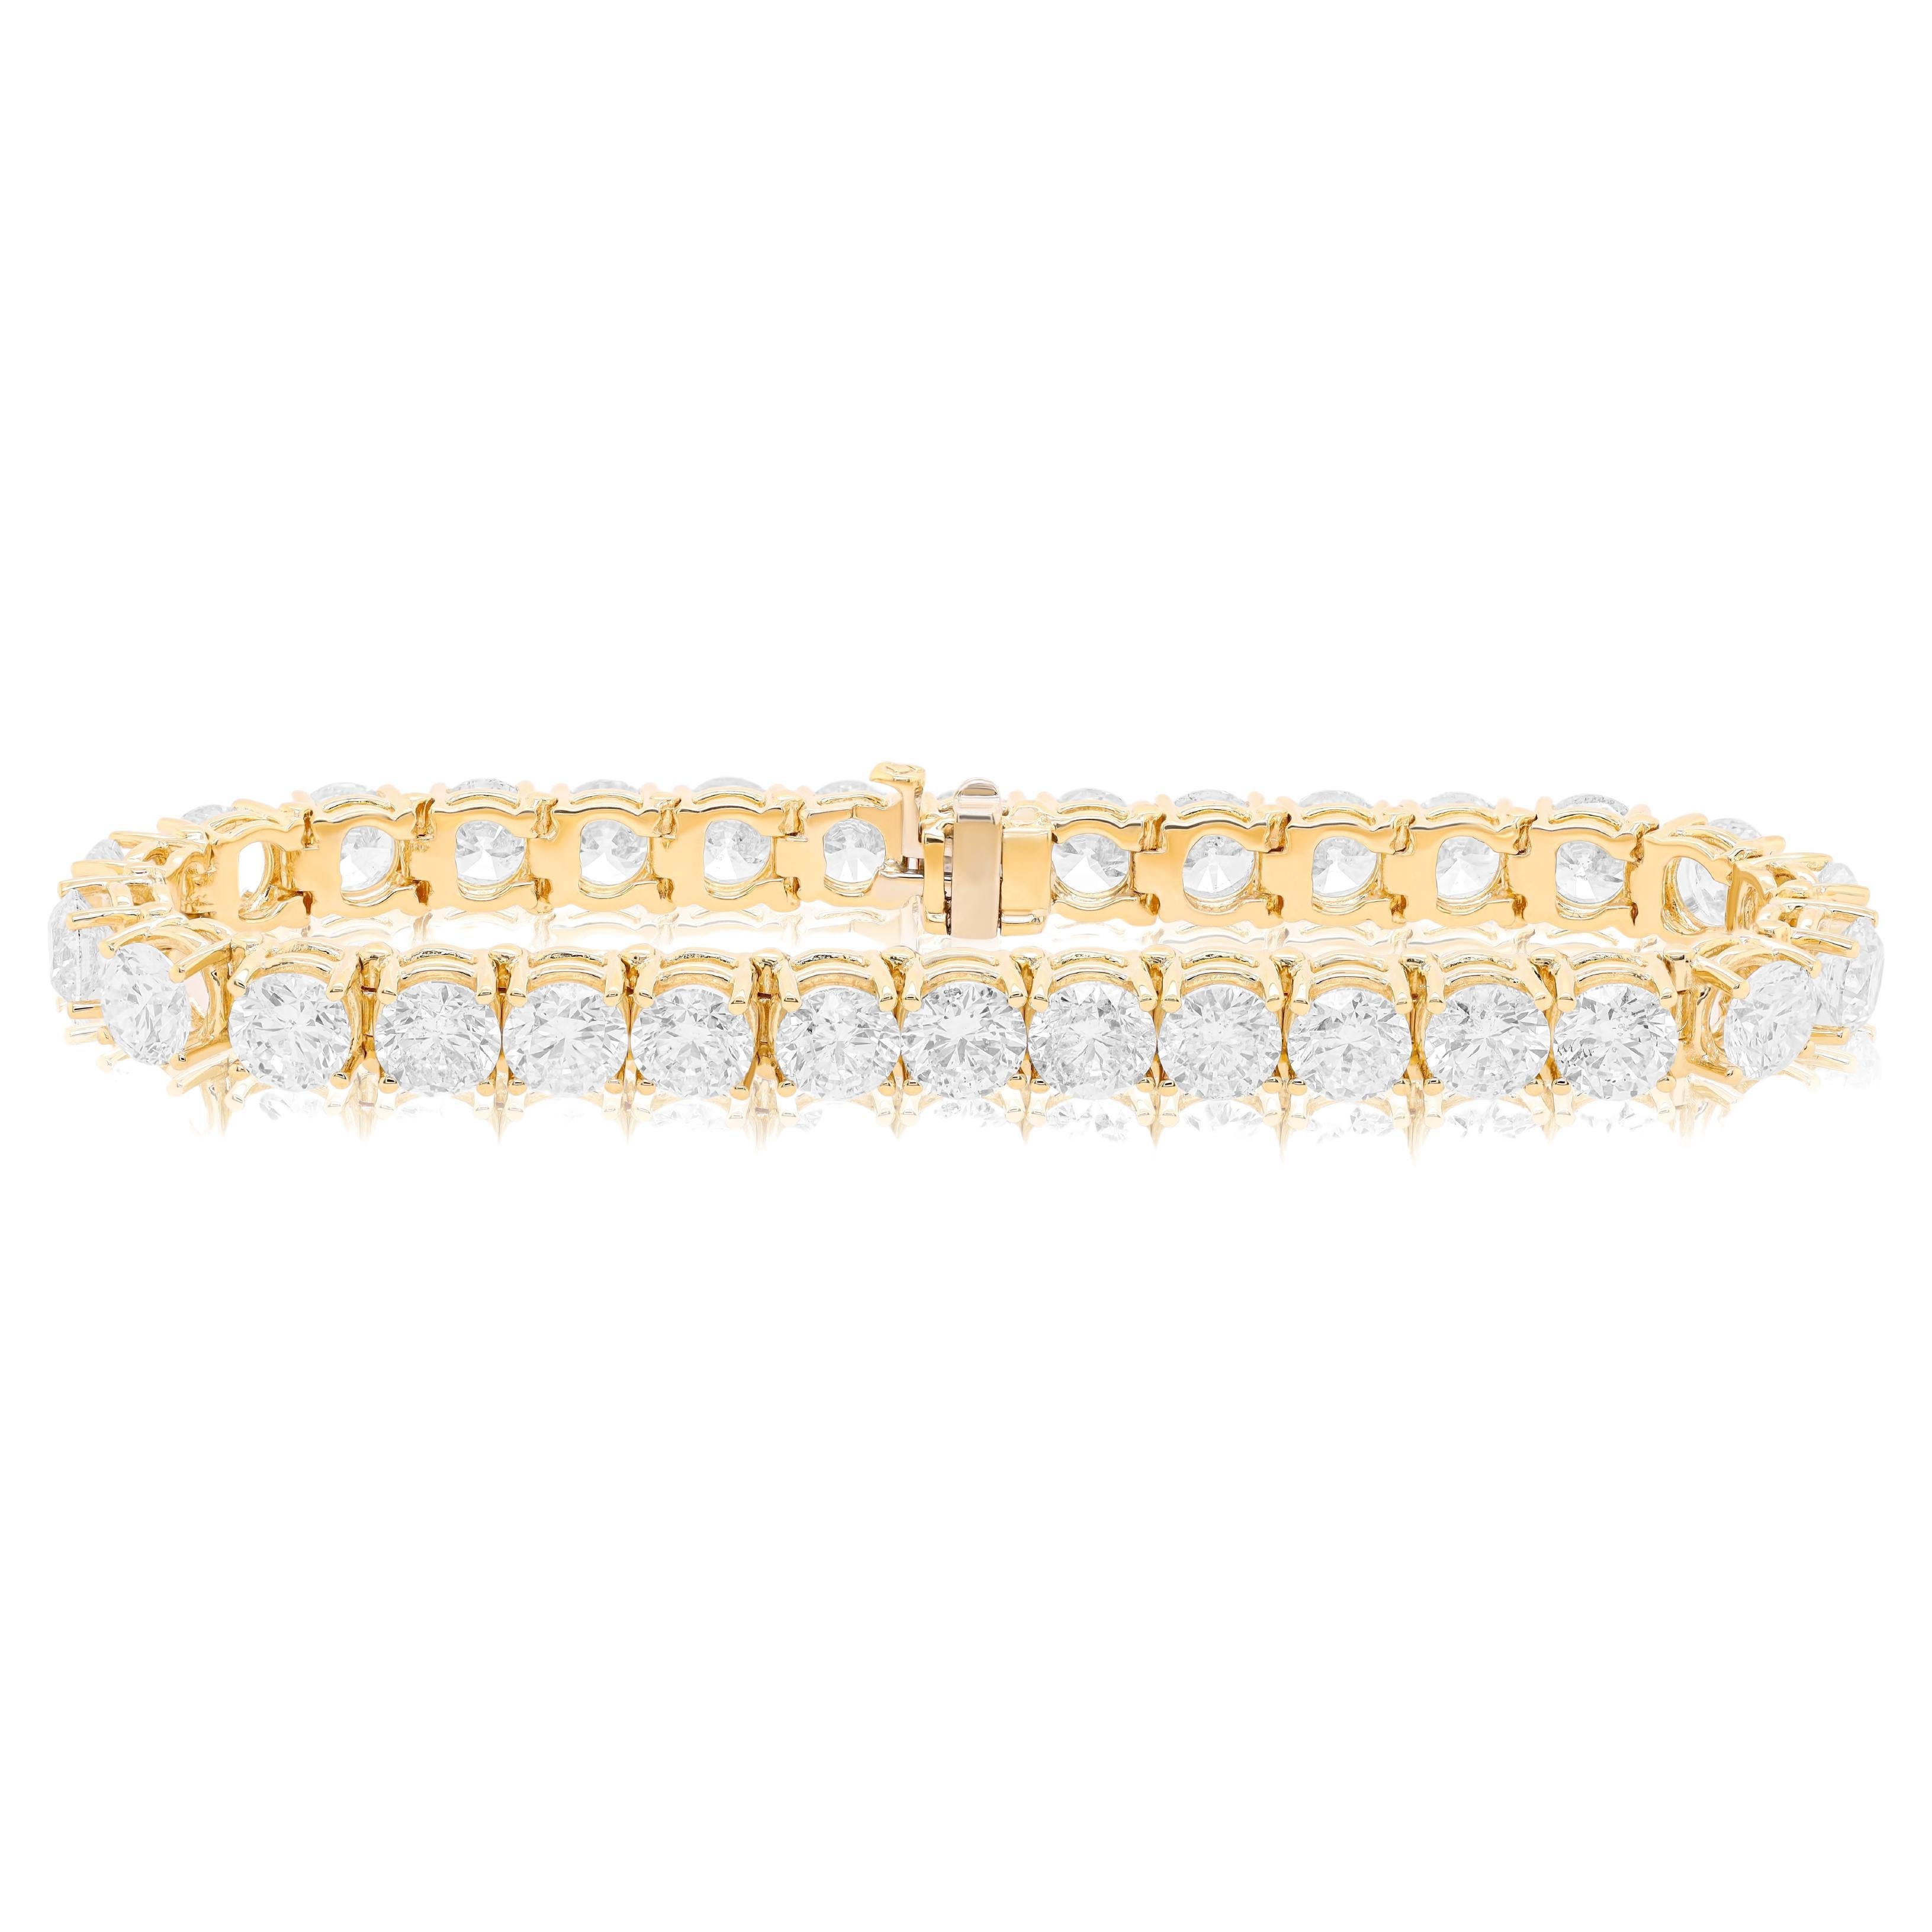 Diana M. custom 21.35 cts round diamond tennis bracelet set in 18kt yellow gold